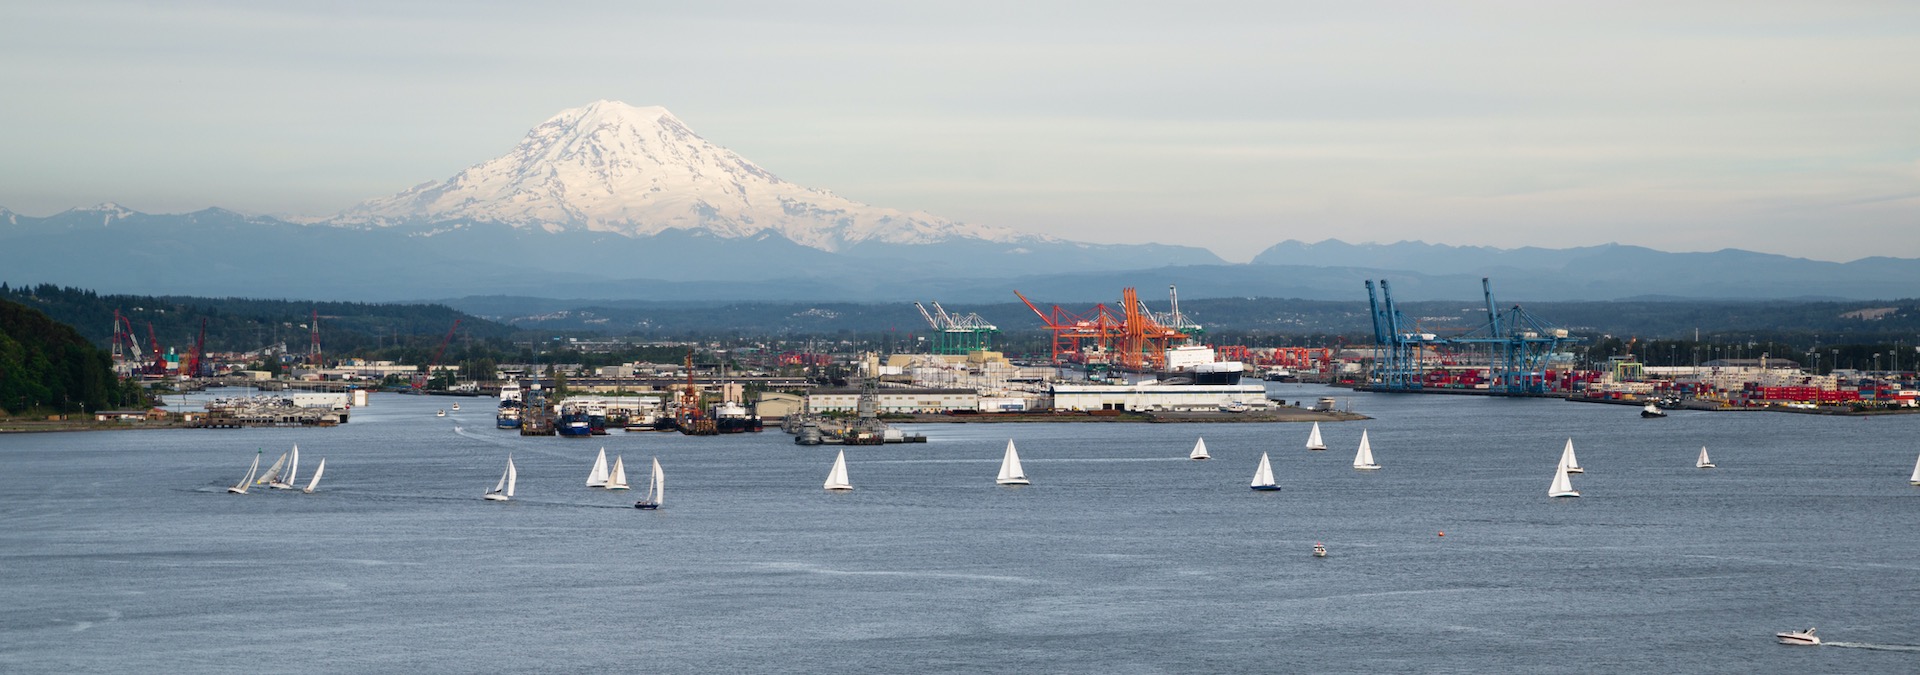 Sailboat Regatta, Commencement Bay, Puget Sound, Downtown Tacoma, Washington